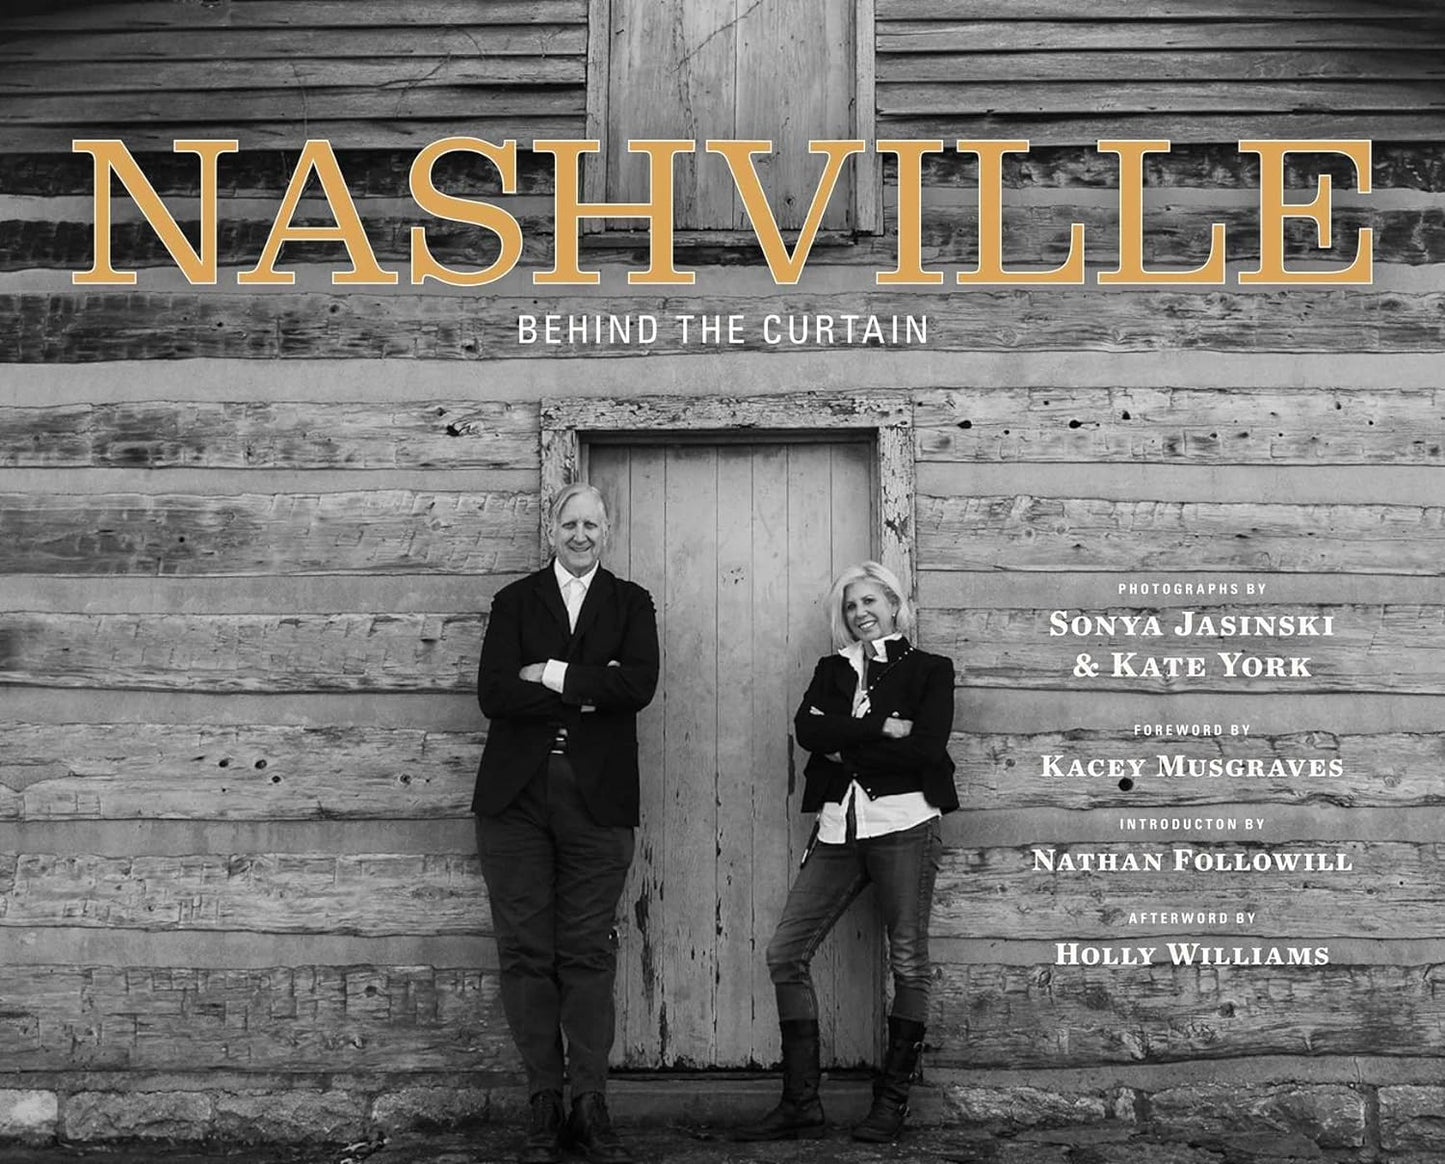 Nashville Behind the Curtain